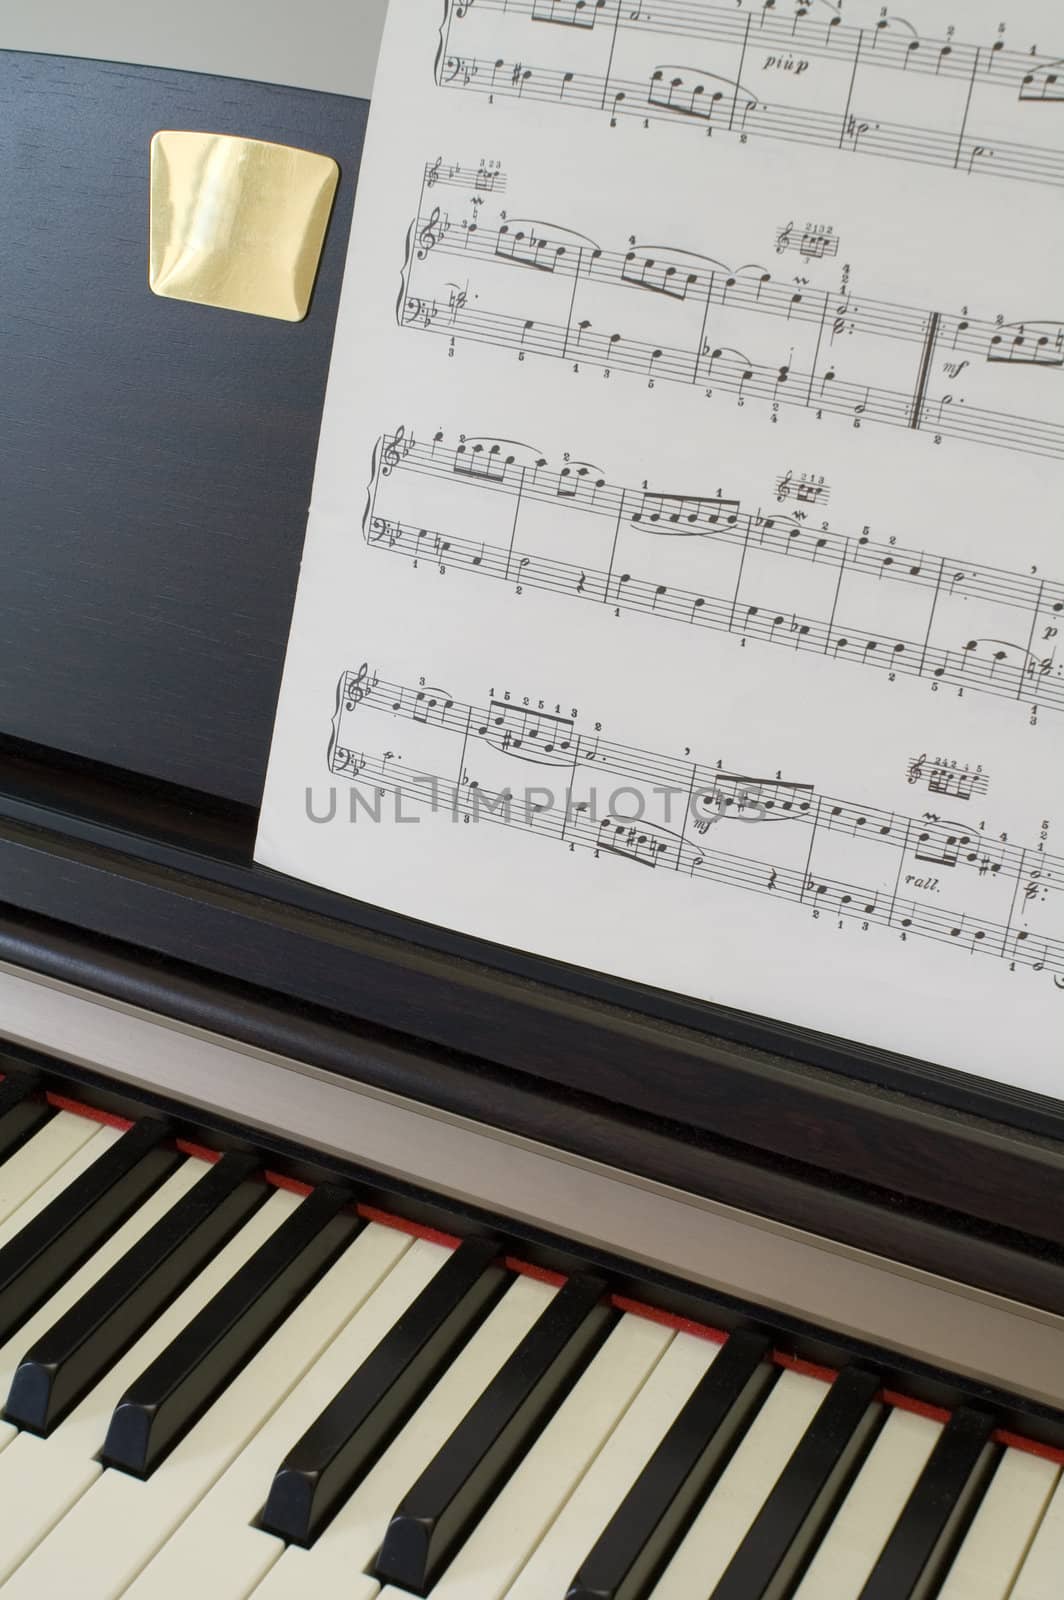 Piano keyboard with Bach score